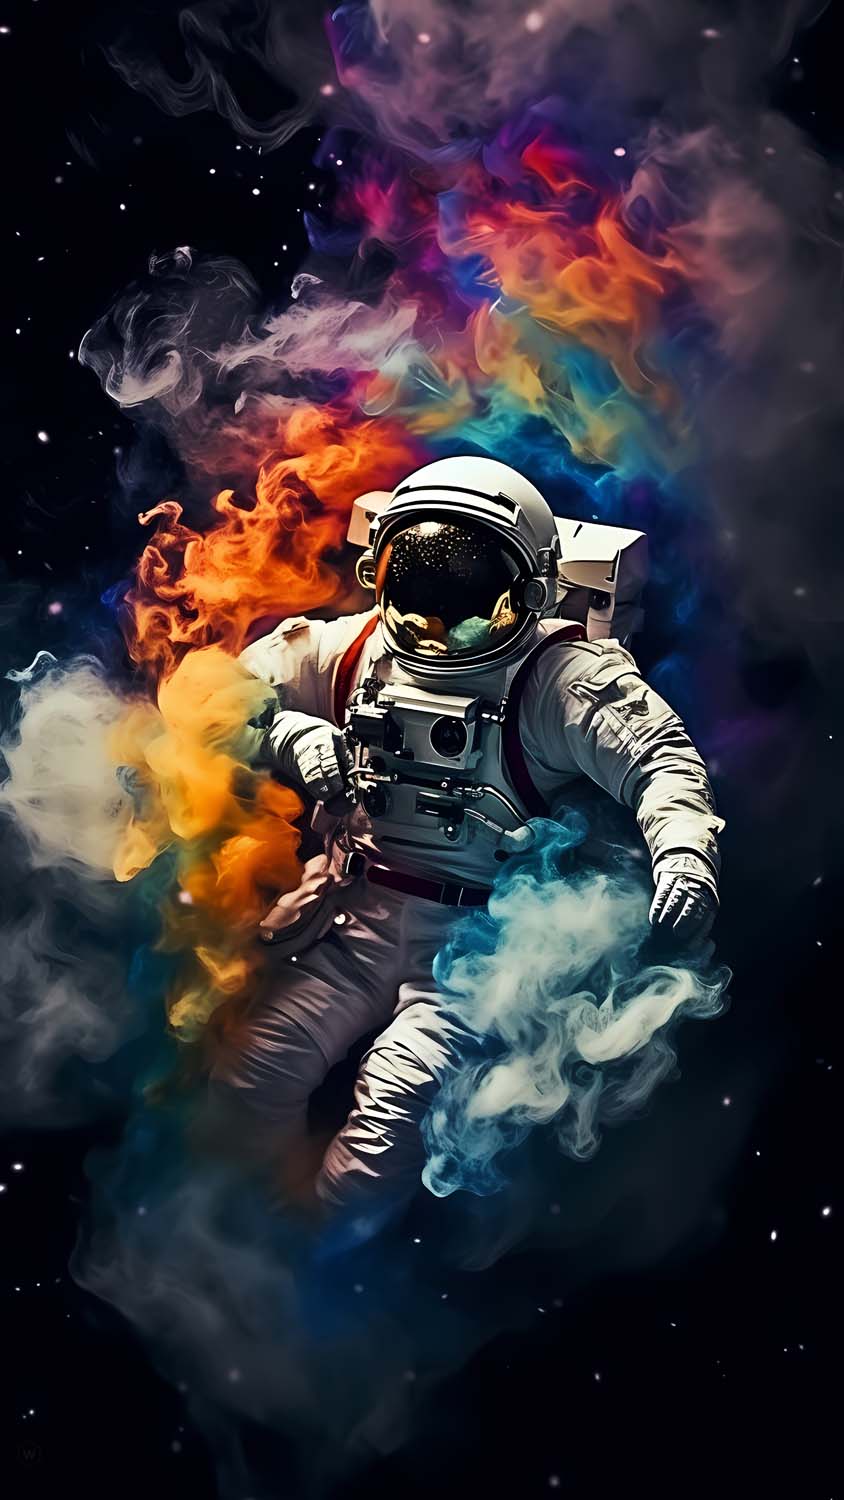 Astronaut Lost in Cosmic Smoke iPhone Wallpaper HD  iPhone Wallpapers